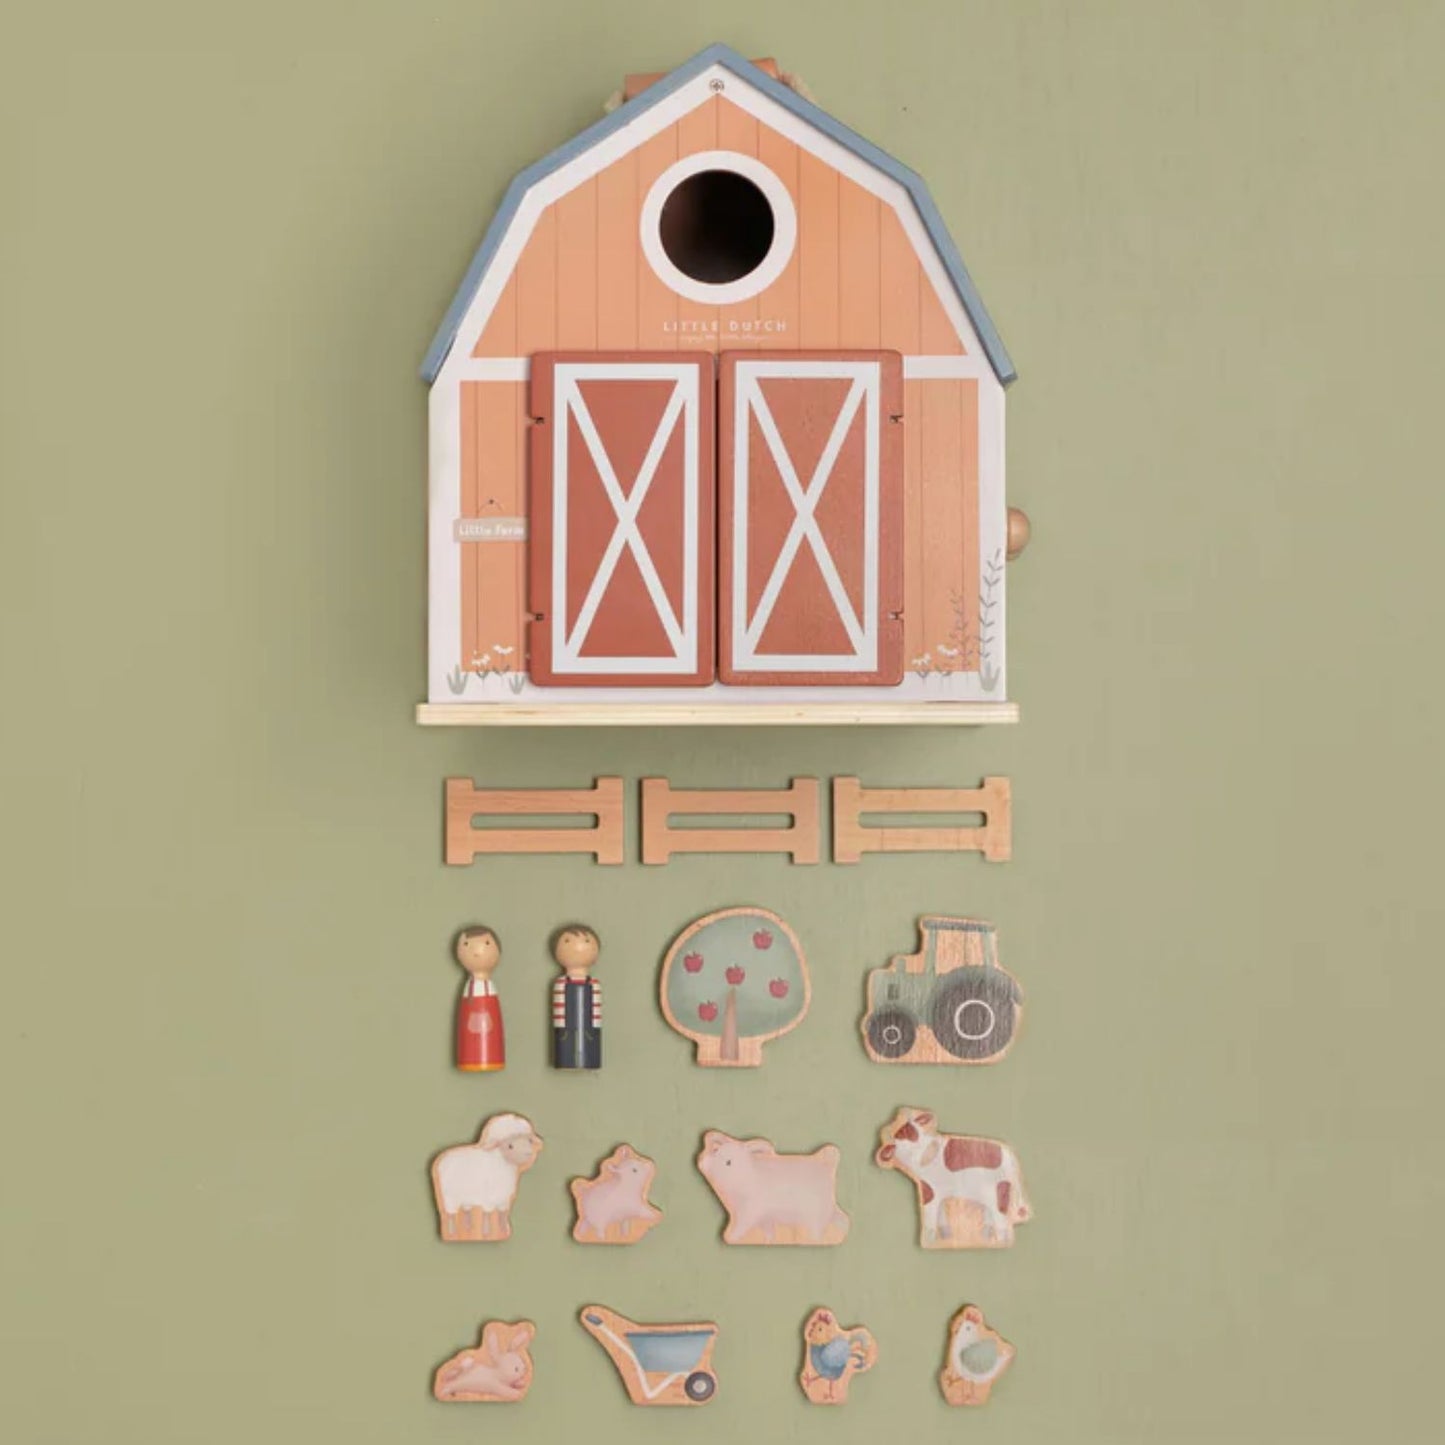 Doll's House Little Farm | Wooden Imaginative Play Toys